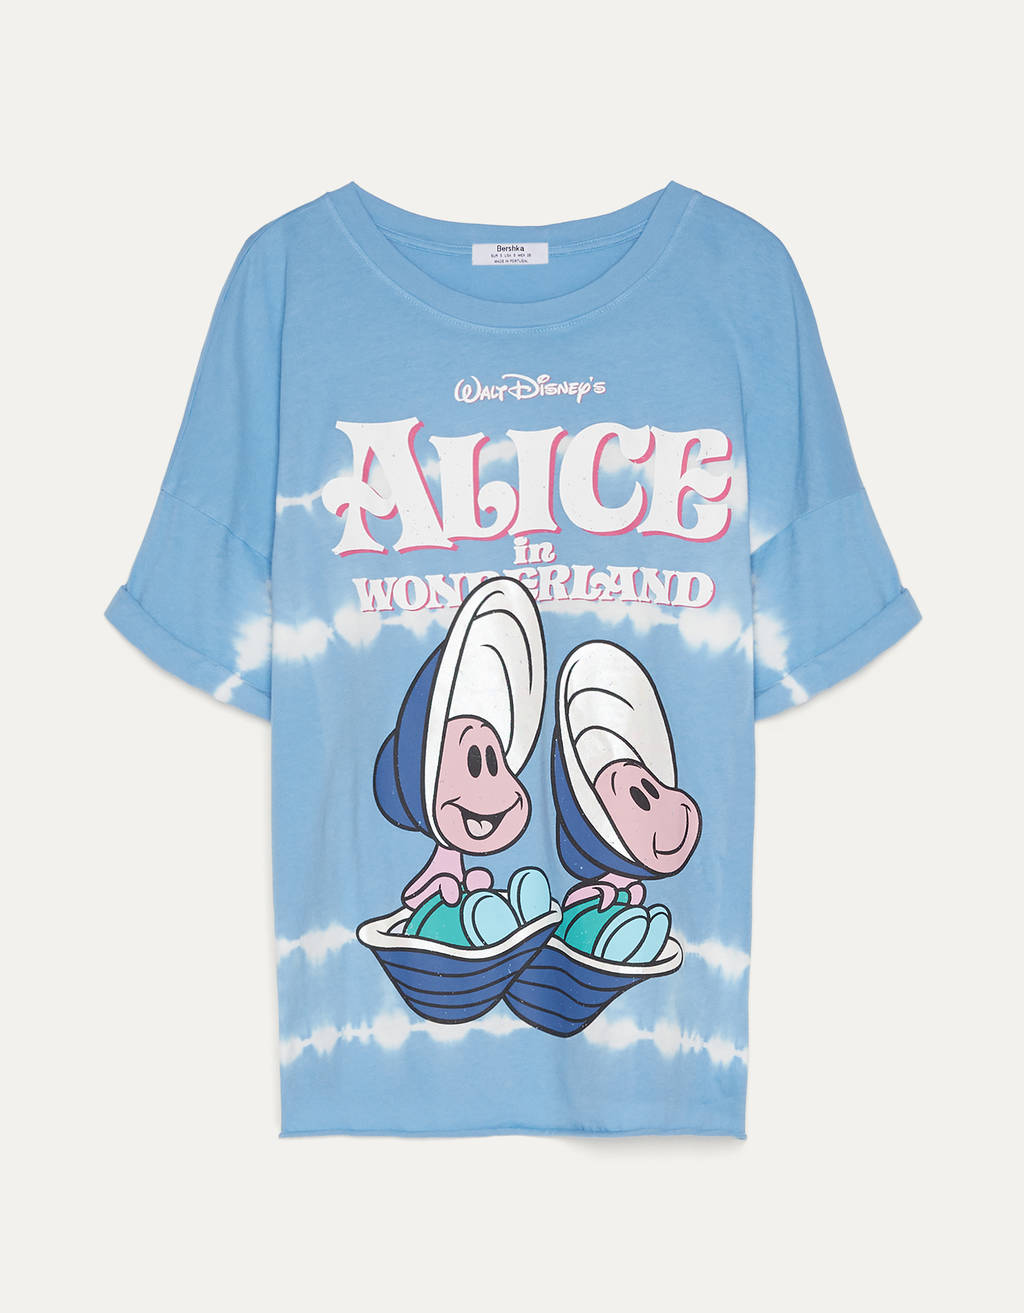 alice in wonderland tee shirt